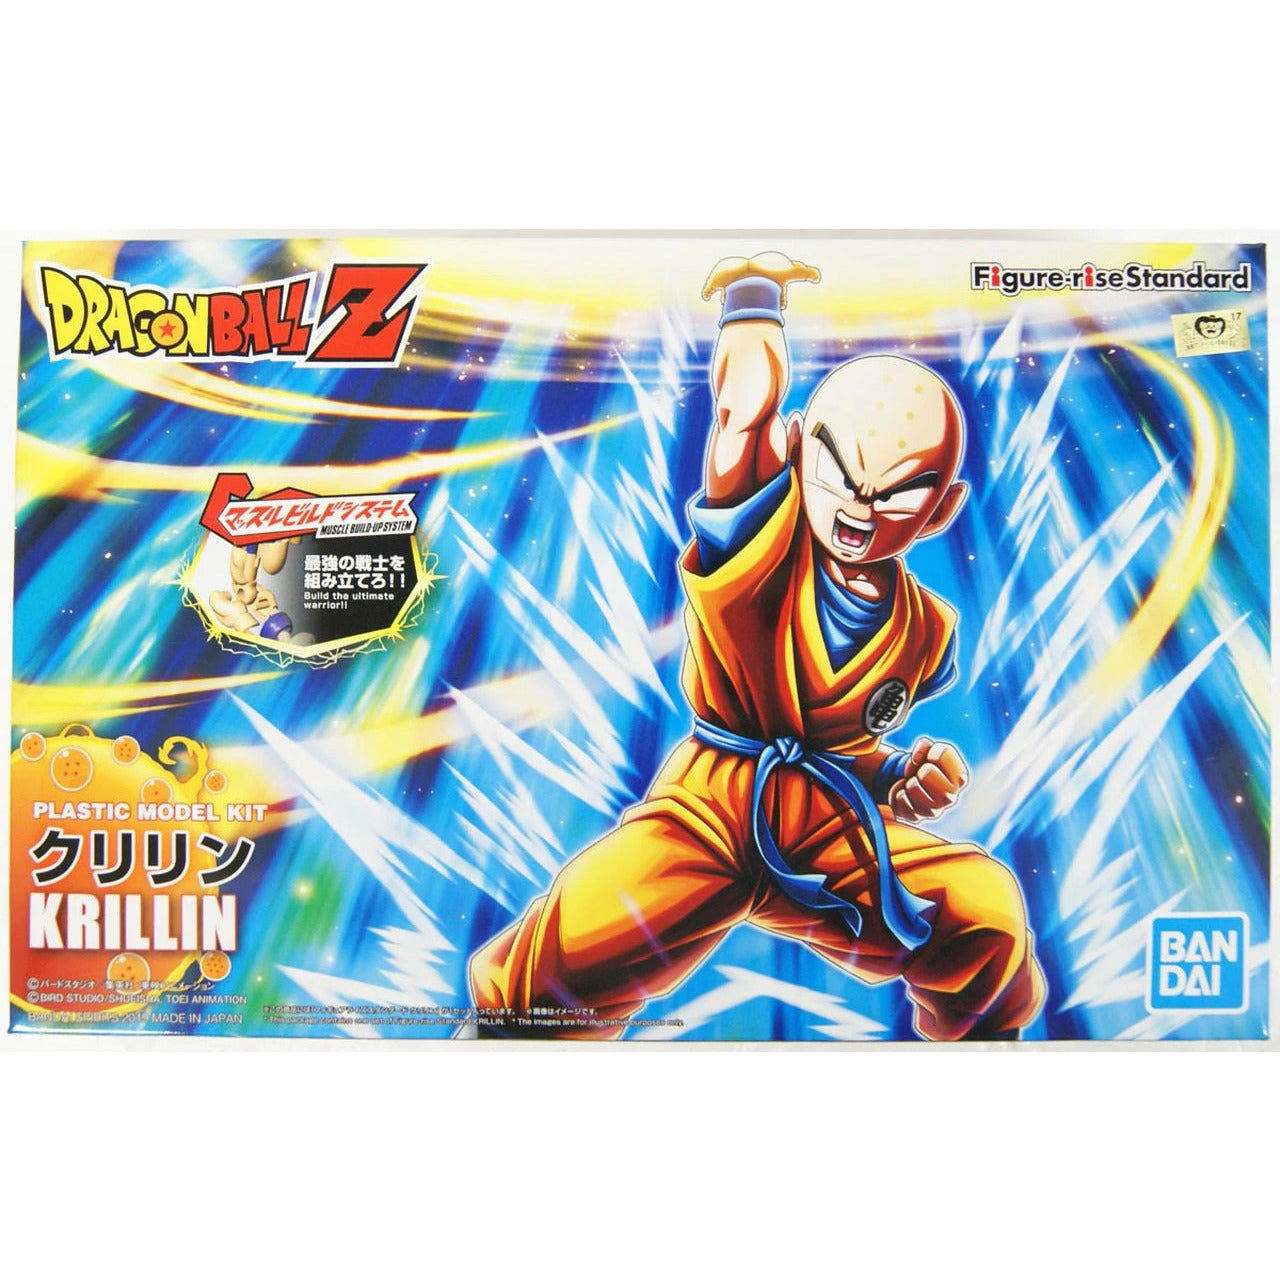 Krillin - Figure-rise Standard #0219761 Dragon Ball Action Figure Model Kit by Bandai